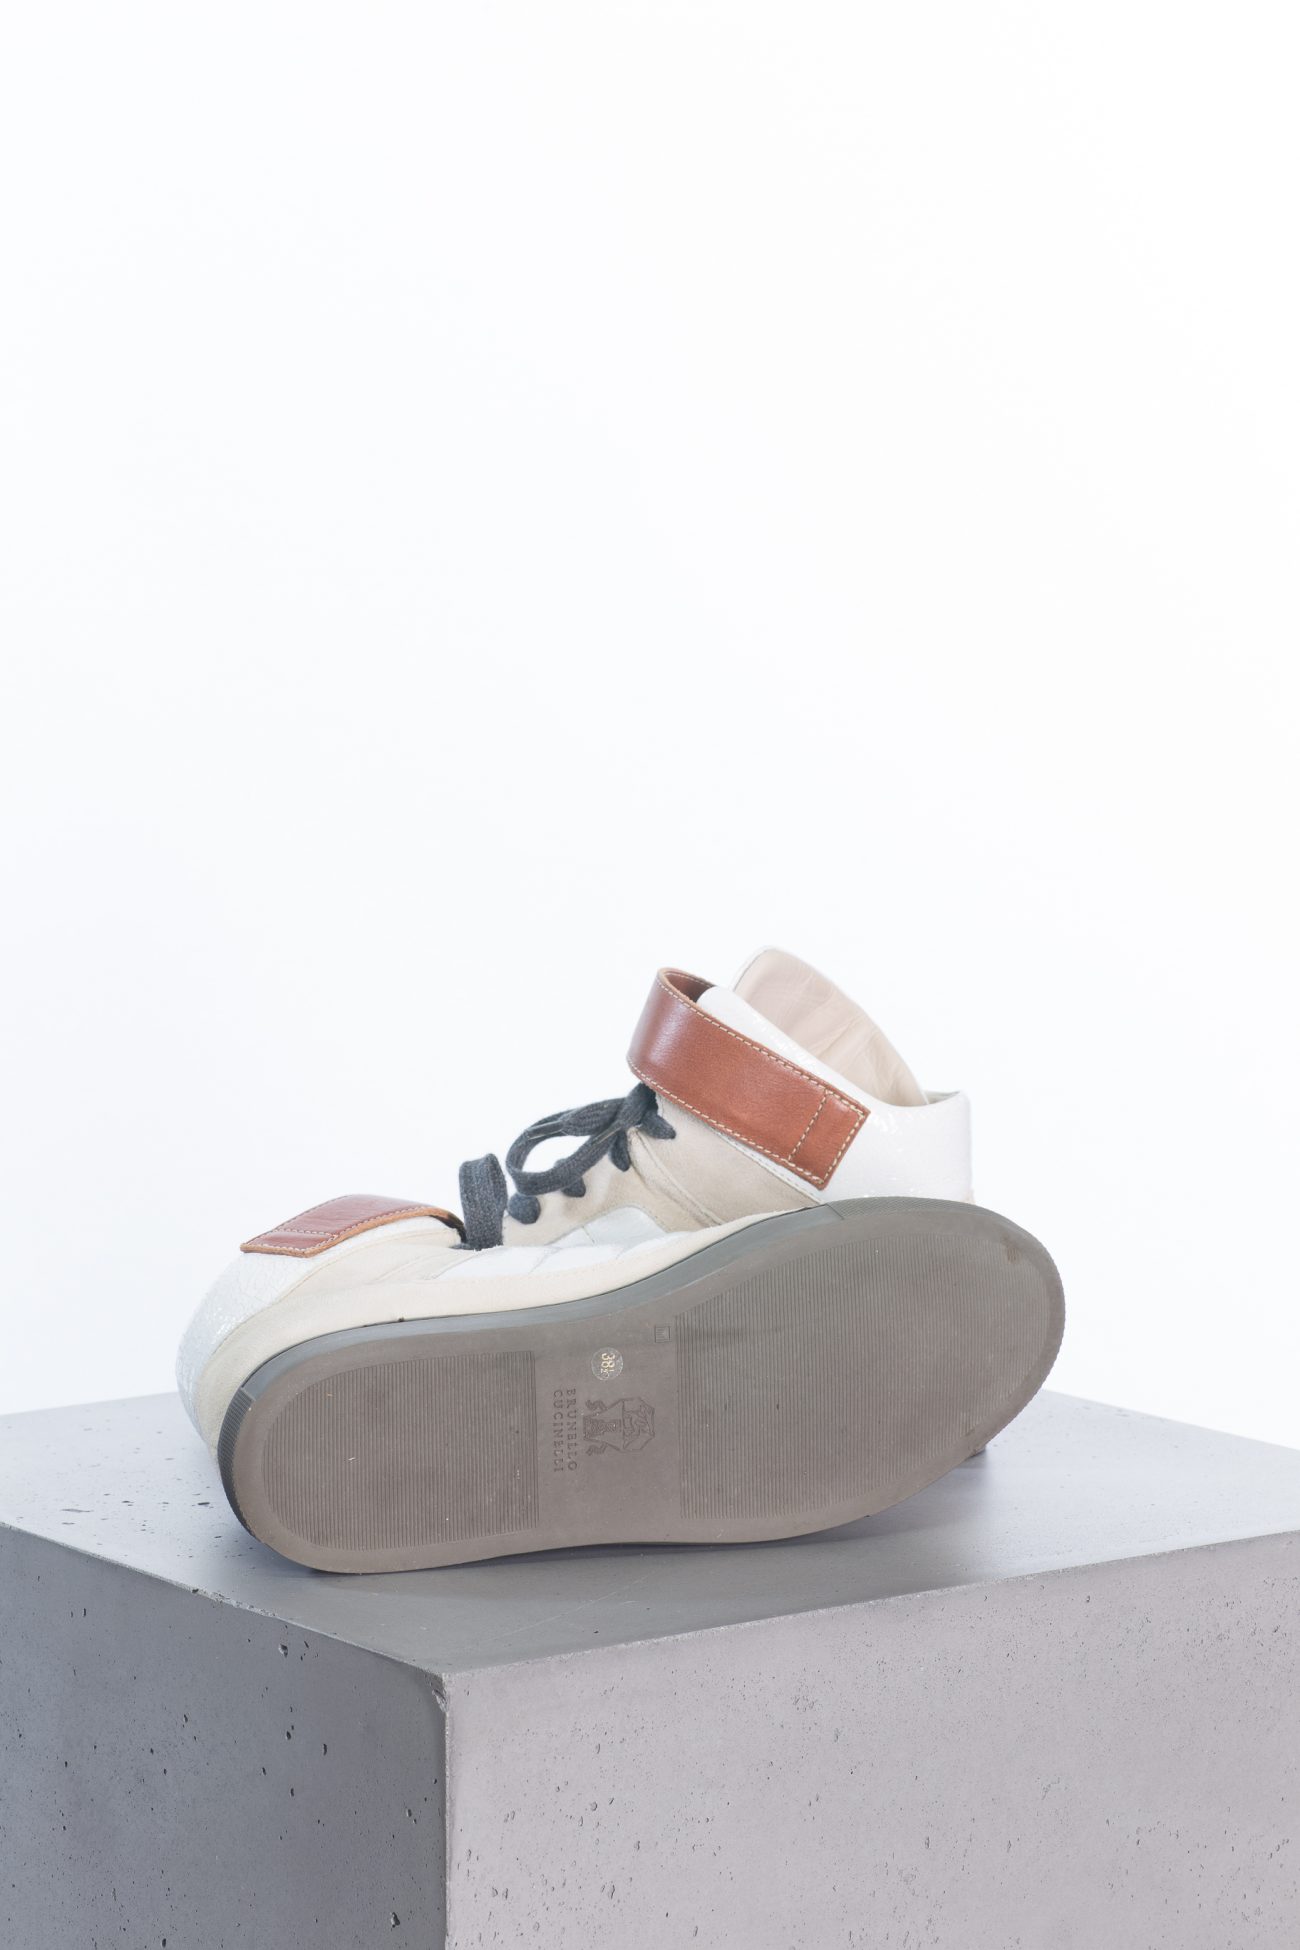 Brunello Cucinelli shoes, 38.5